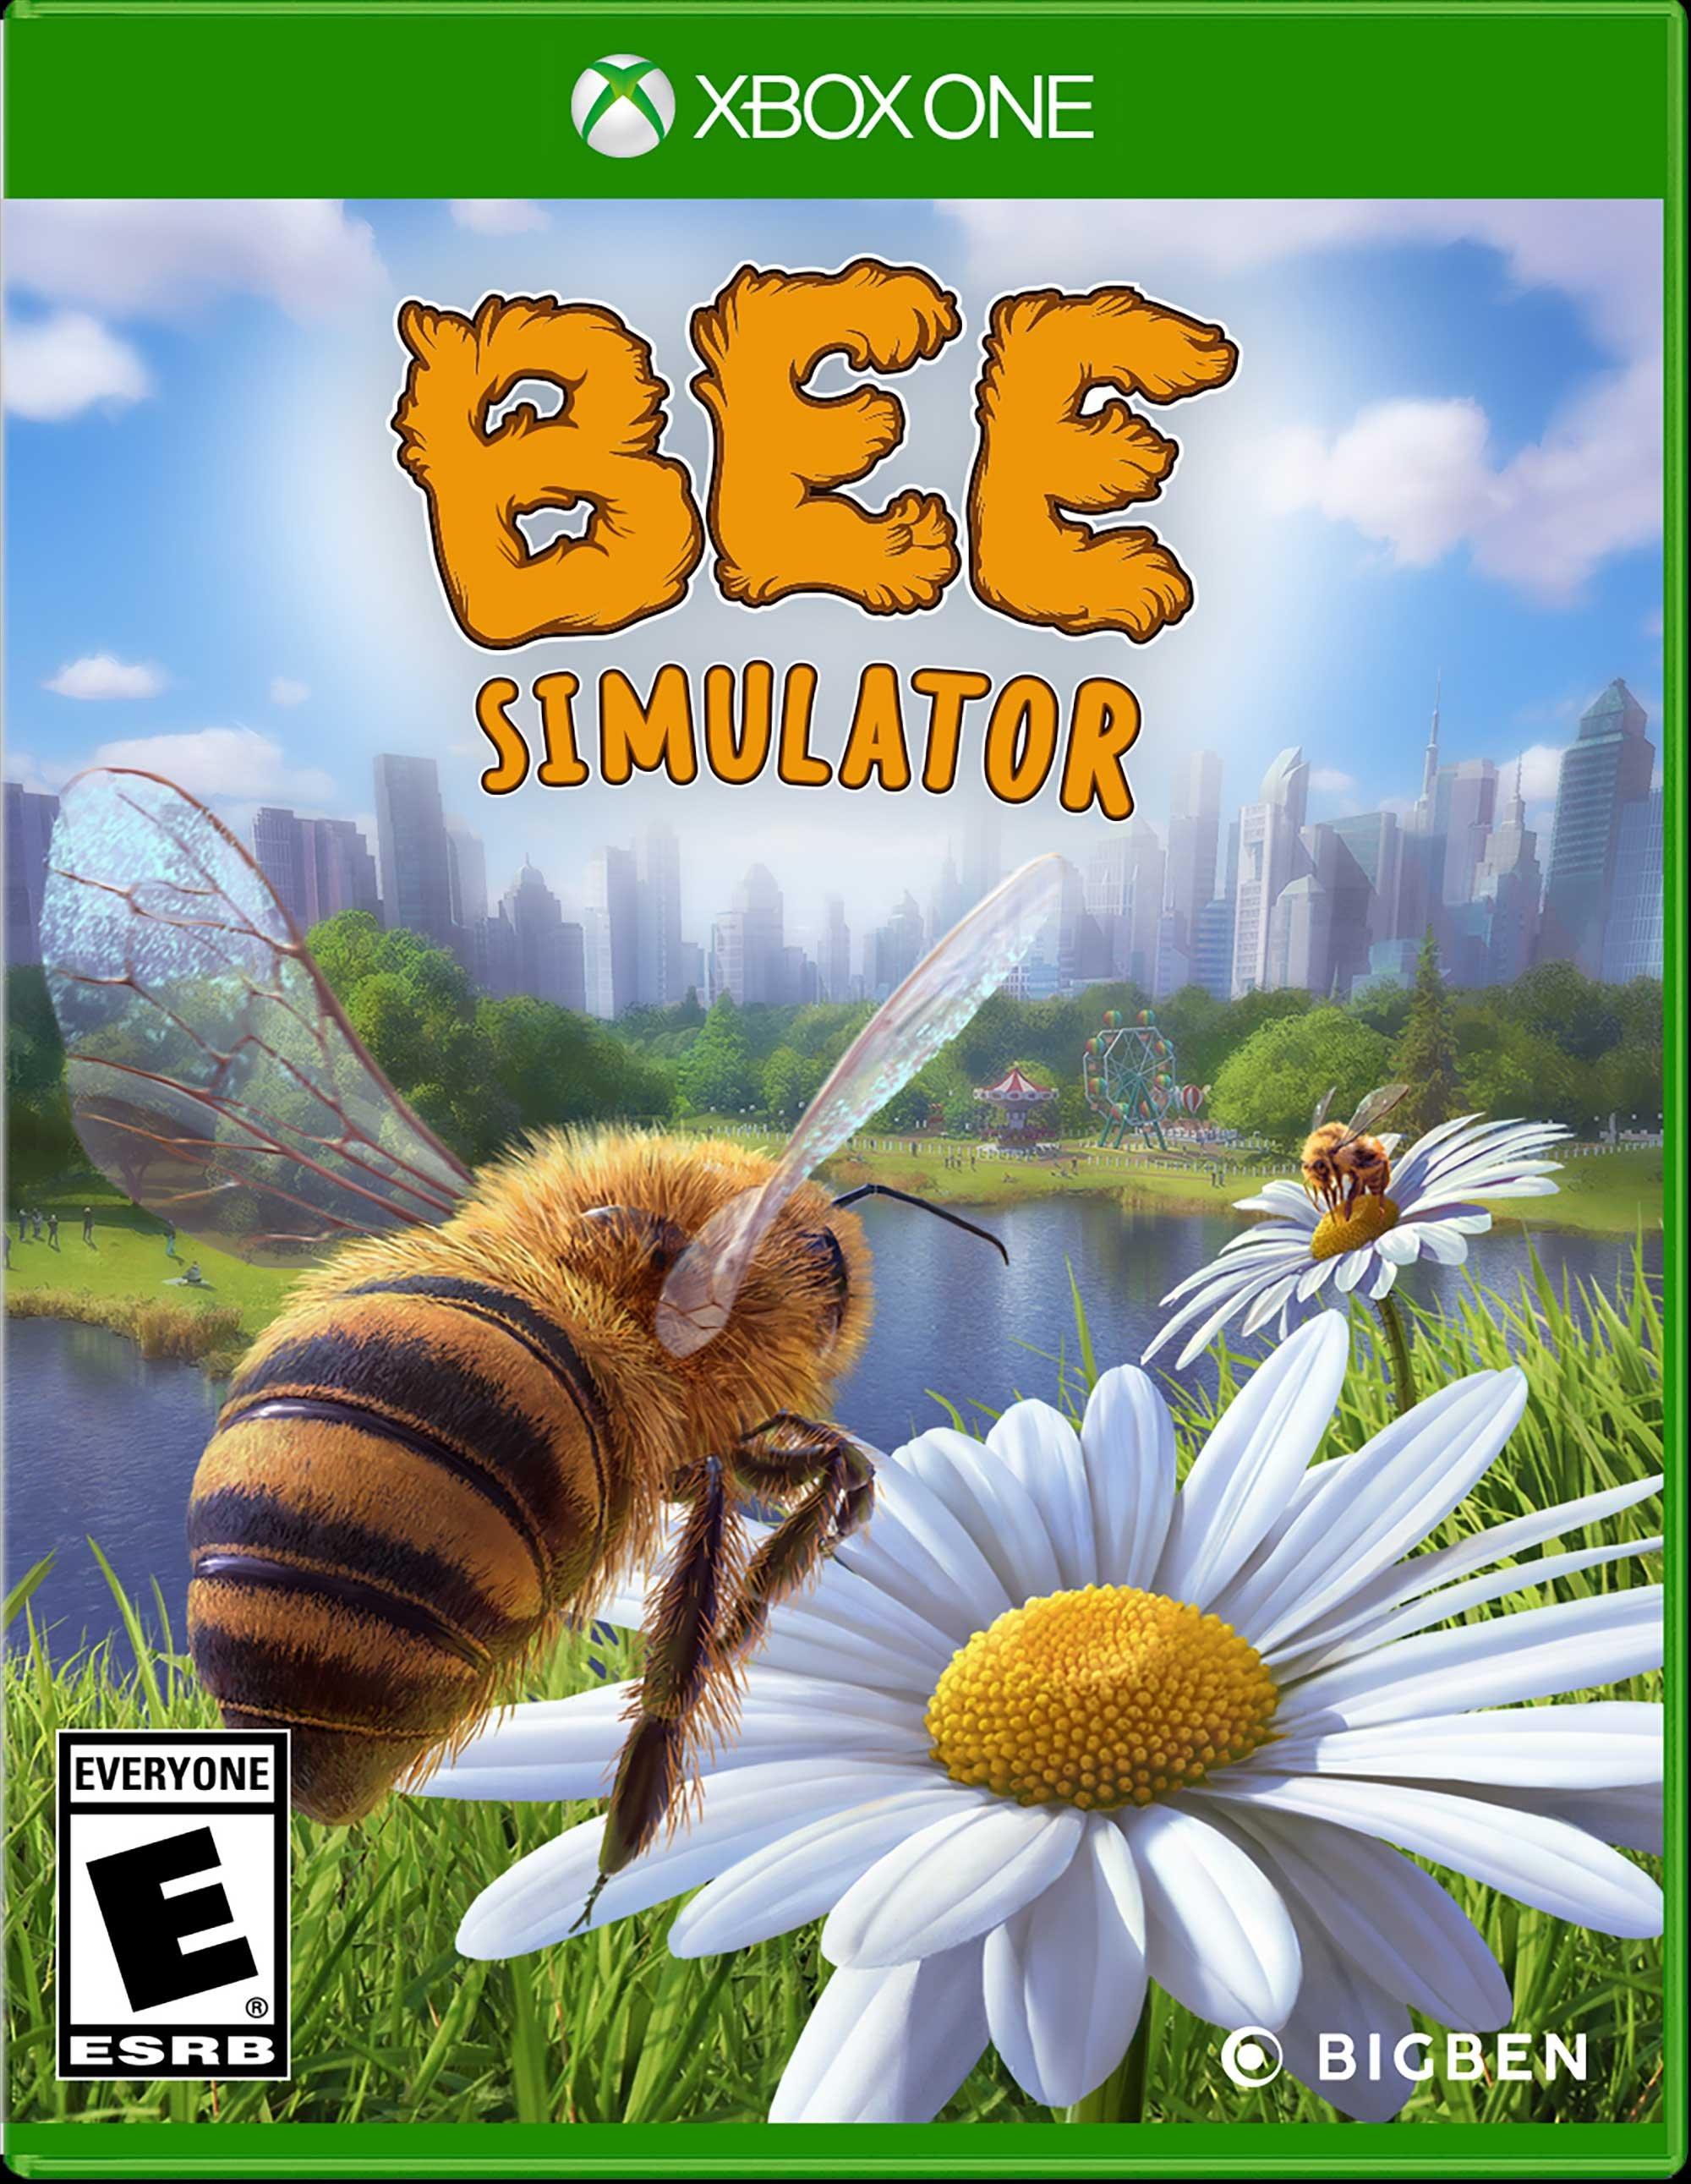 Code Bee Simulator